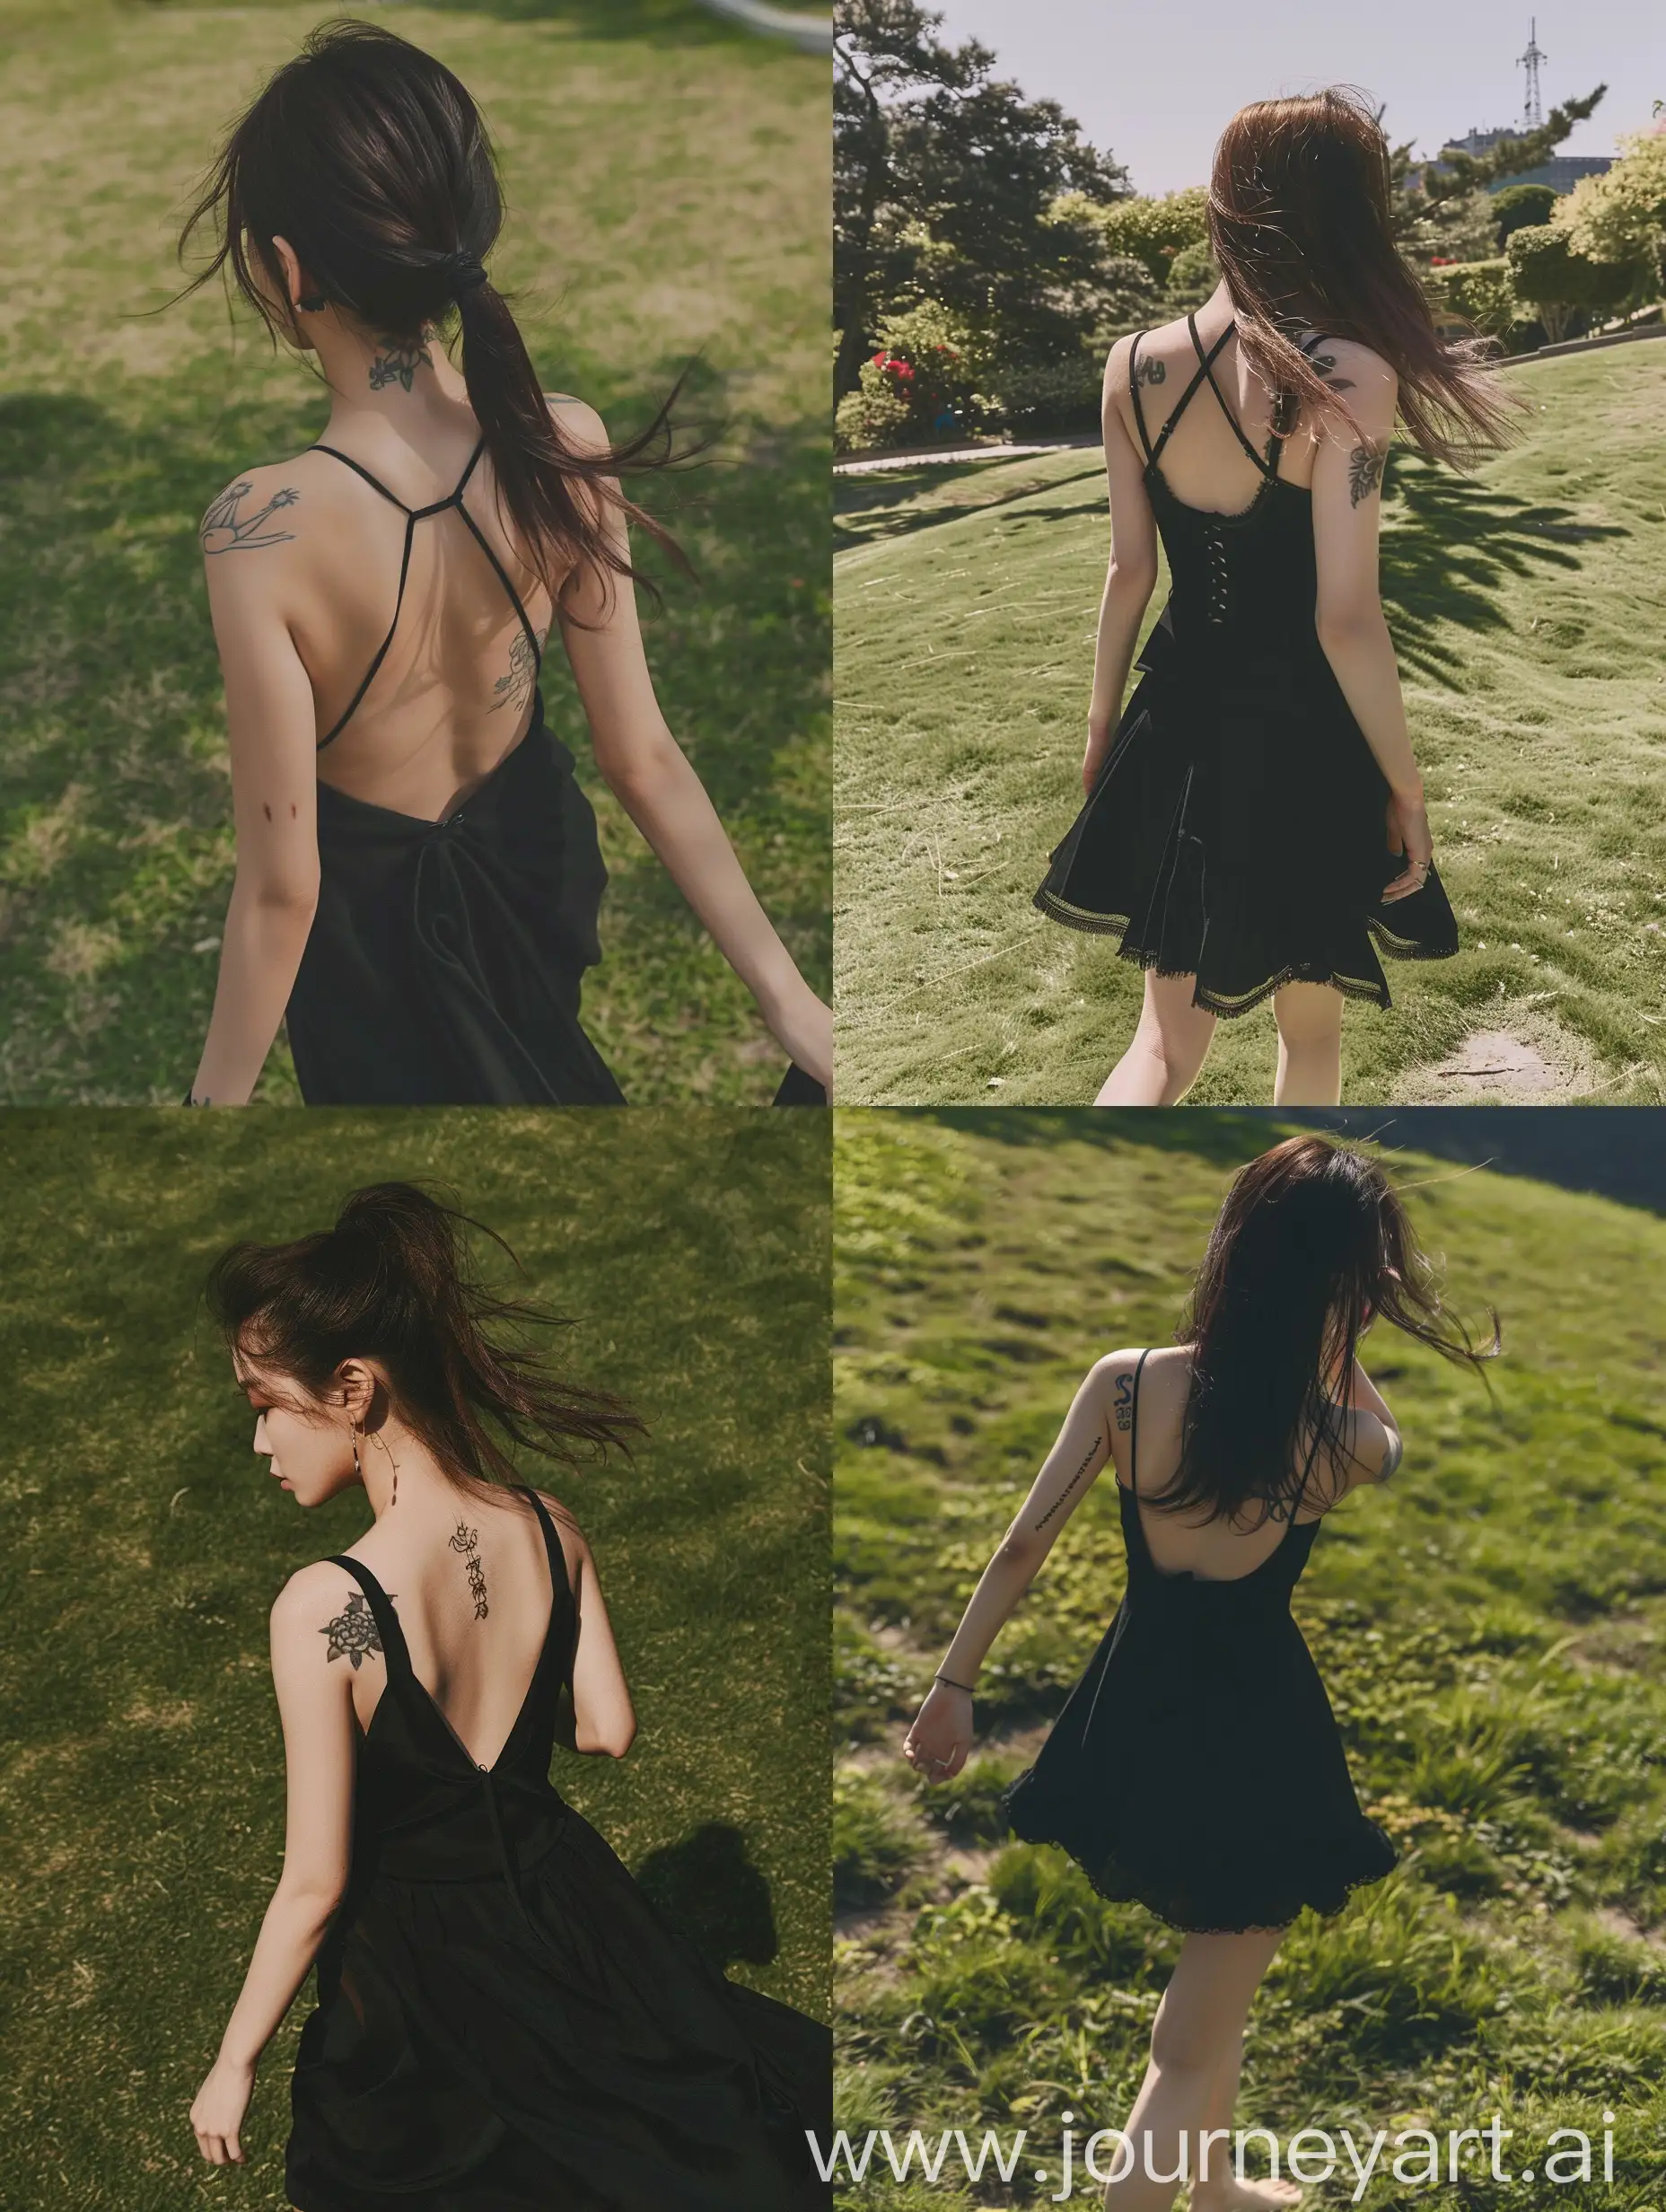 Graceful-Stroll-Blackpinks-Jennie-in-a-Stunning-Black-Dress-on-Lush-Green-Grass